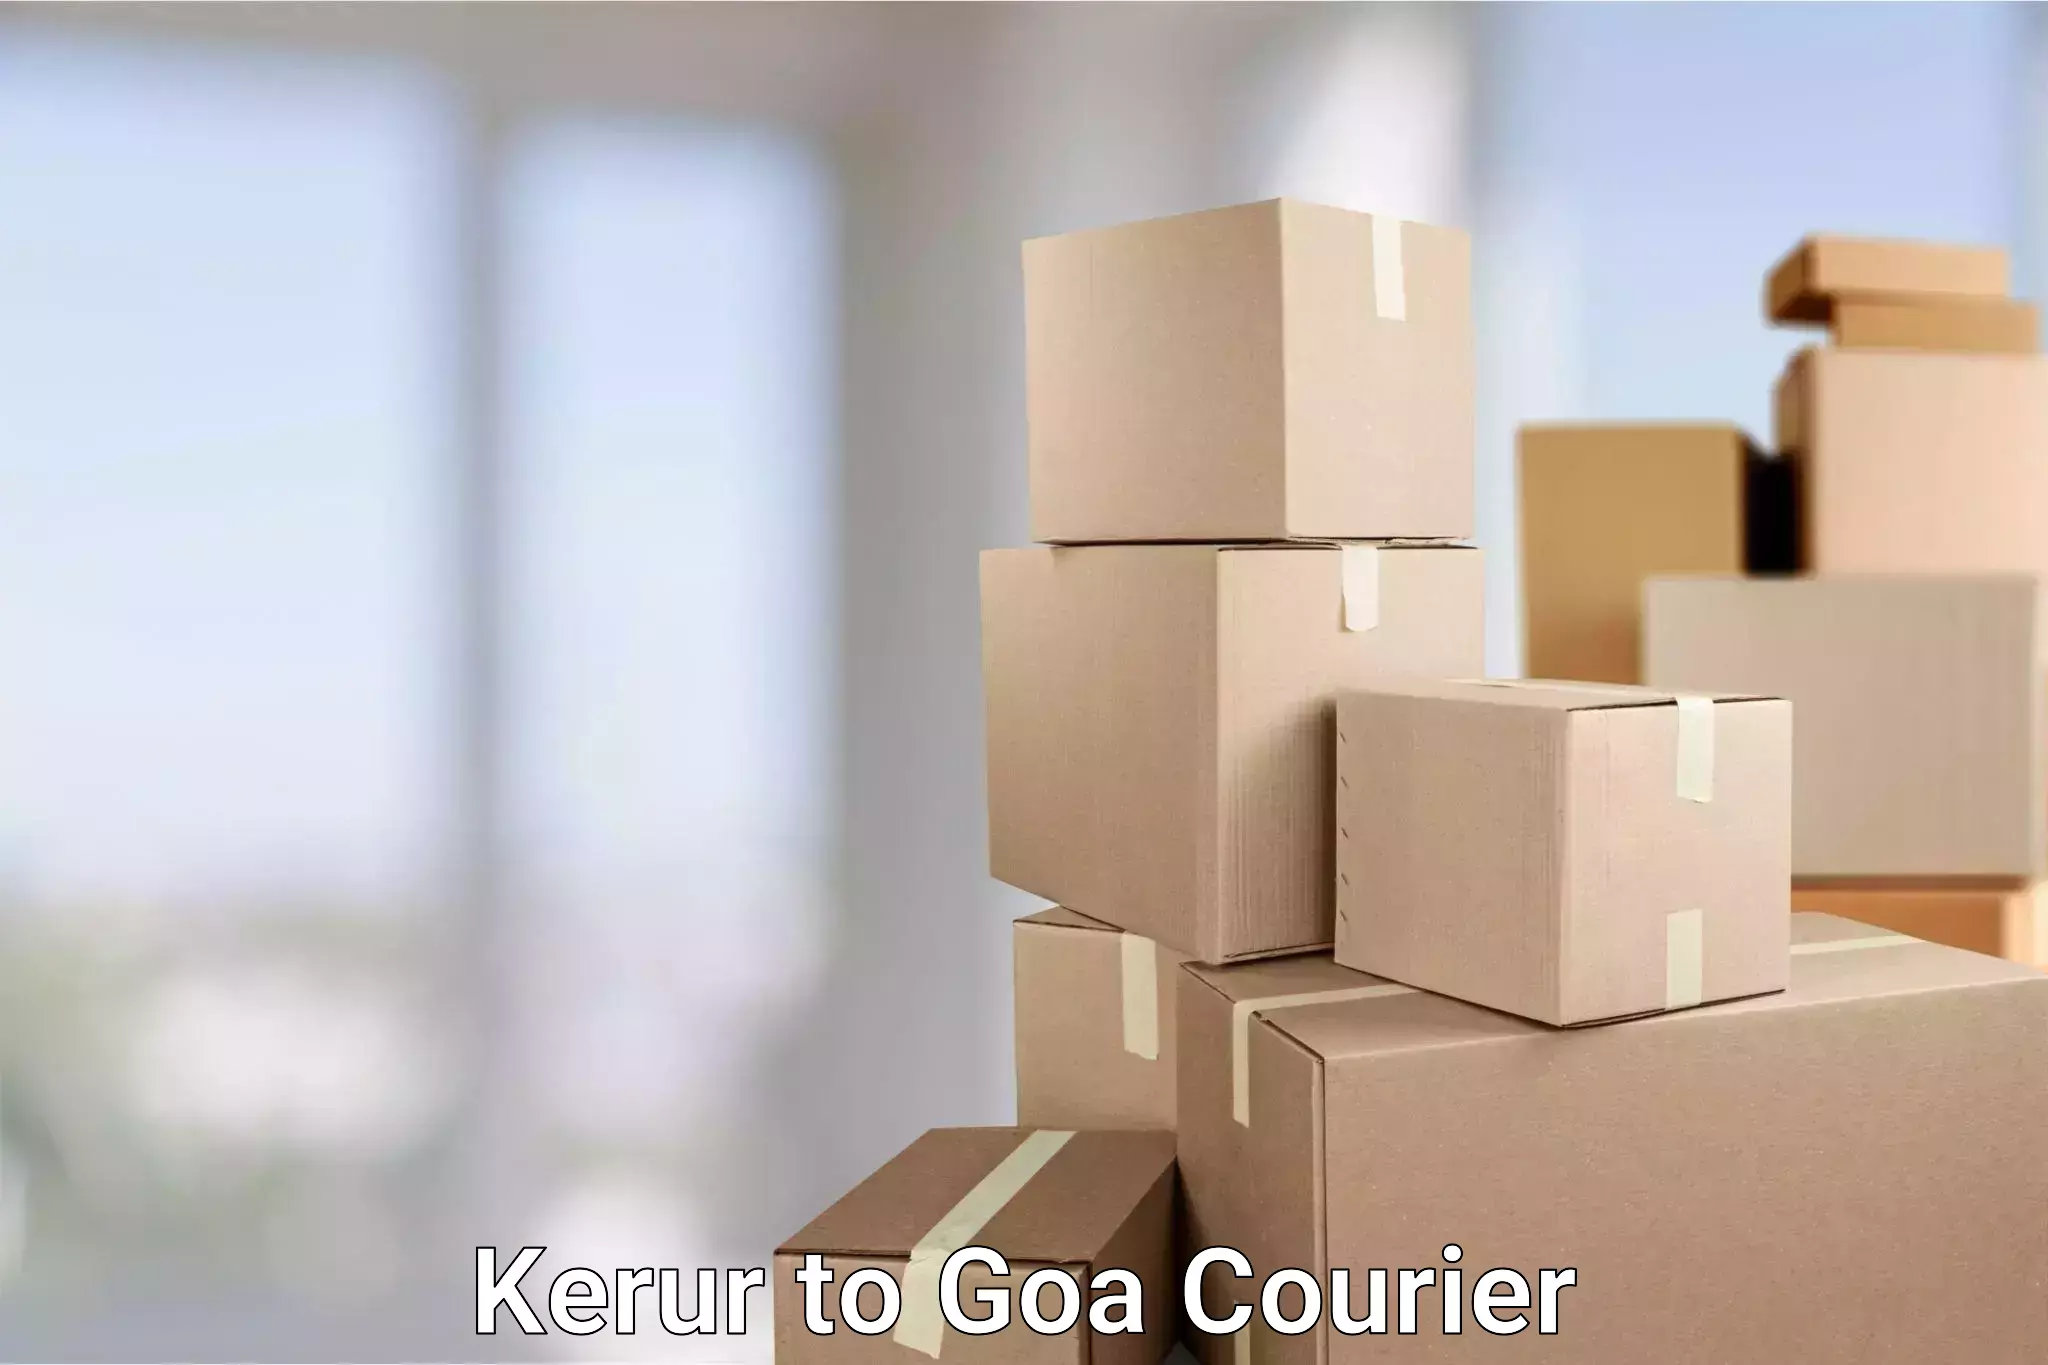 24-hour courier service Kerur to Panaji